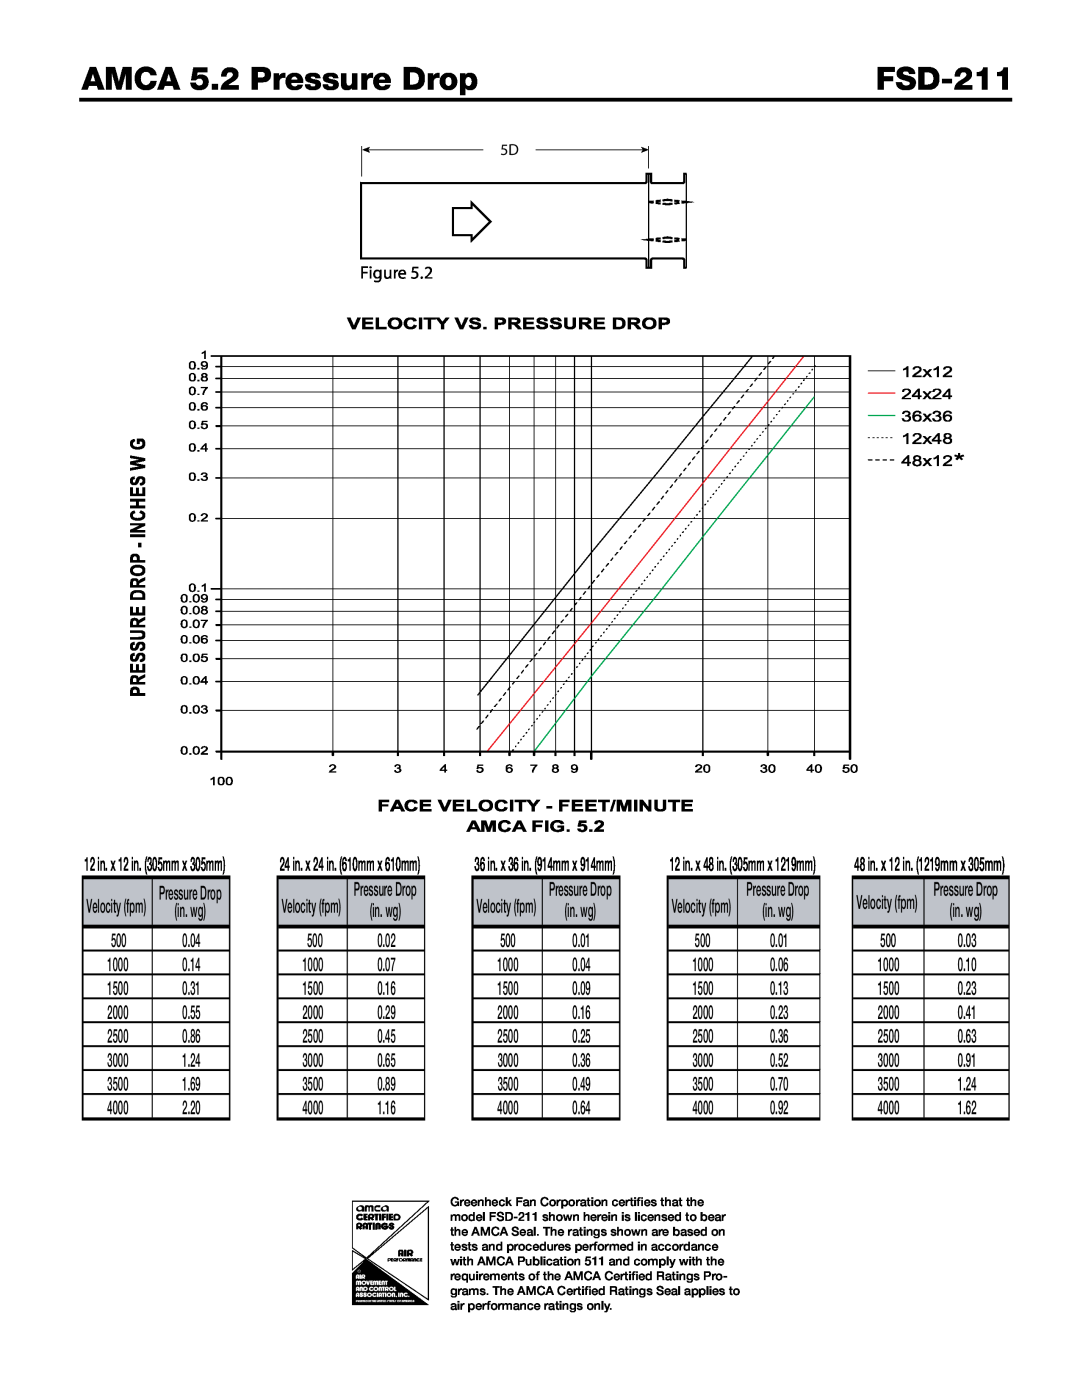 Greenheck Fan FSD-211 dimensions AMCA 5.2 Pressure Drop, 1000, 1500, 2000, 2500, 3000, 3500, 4000 